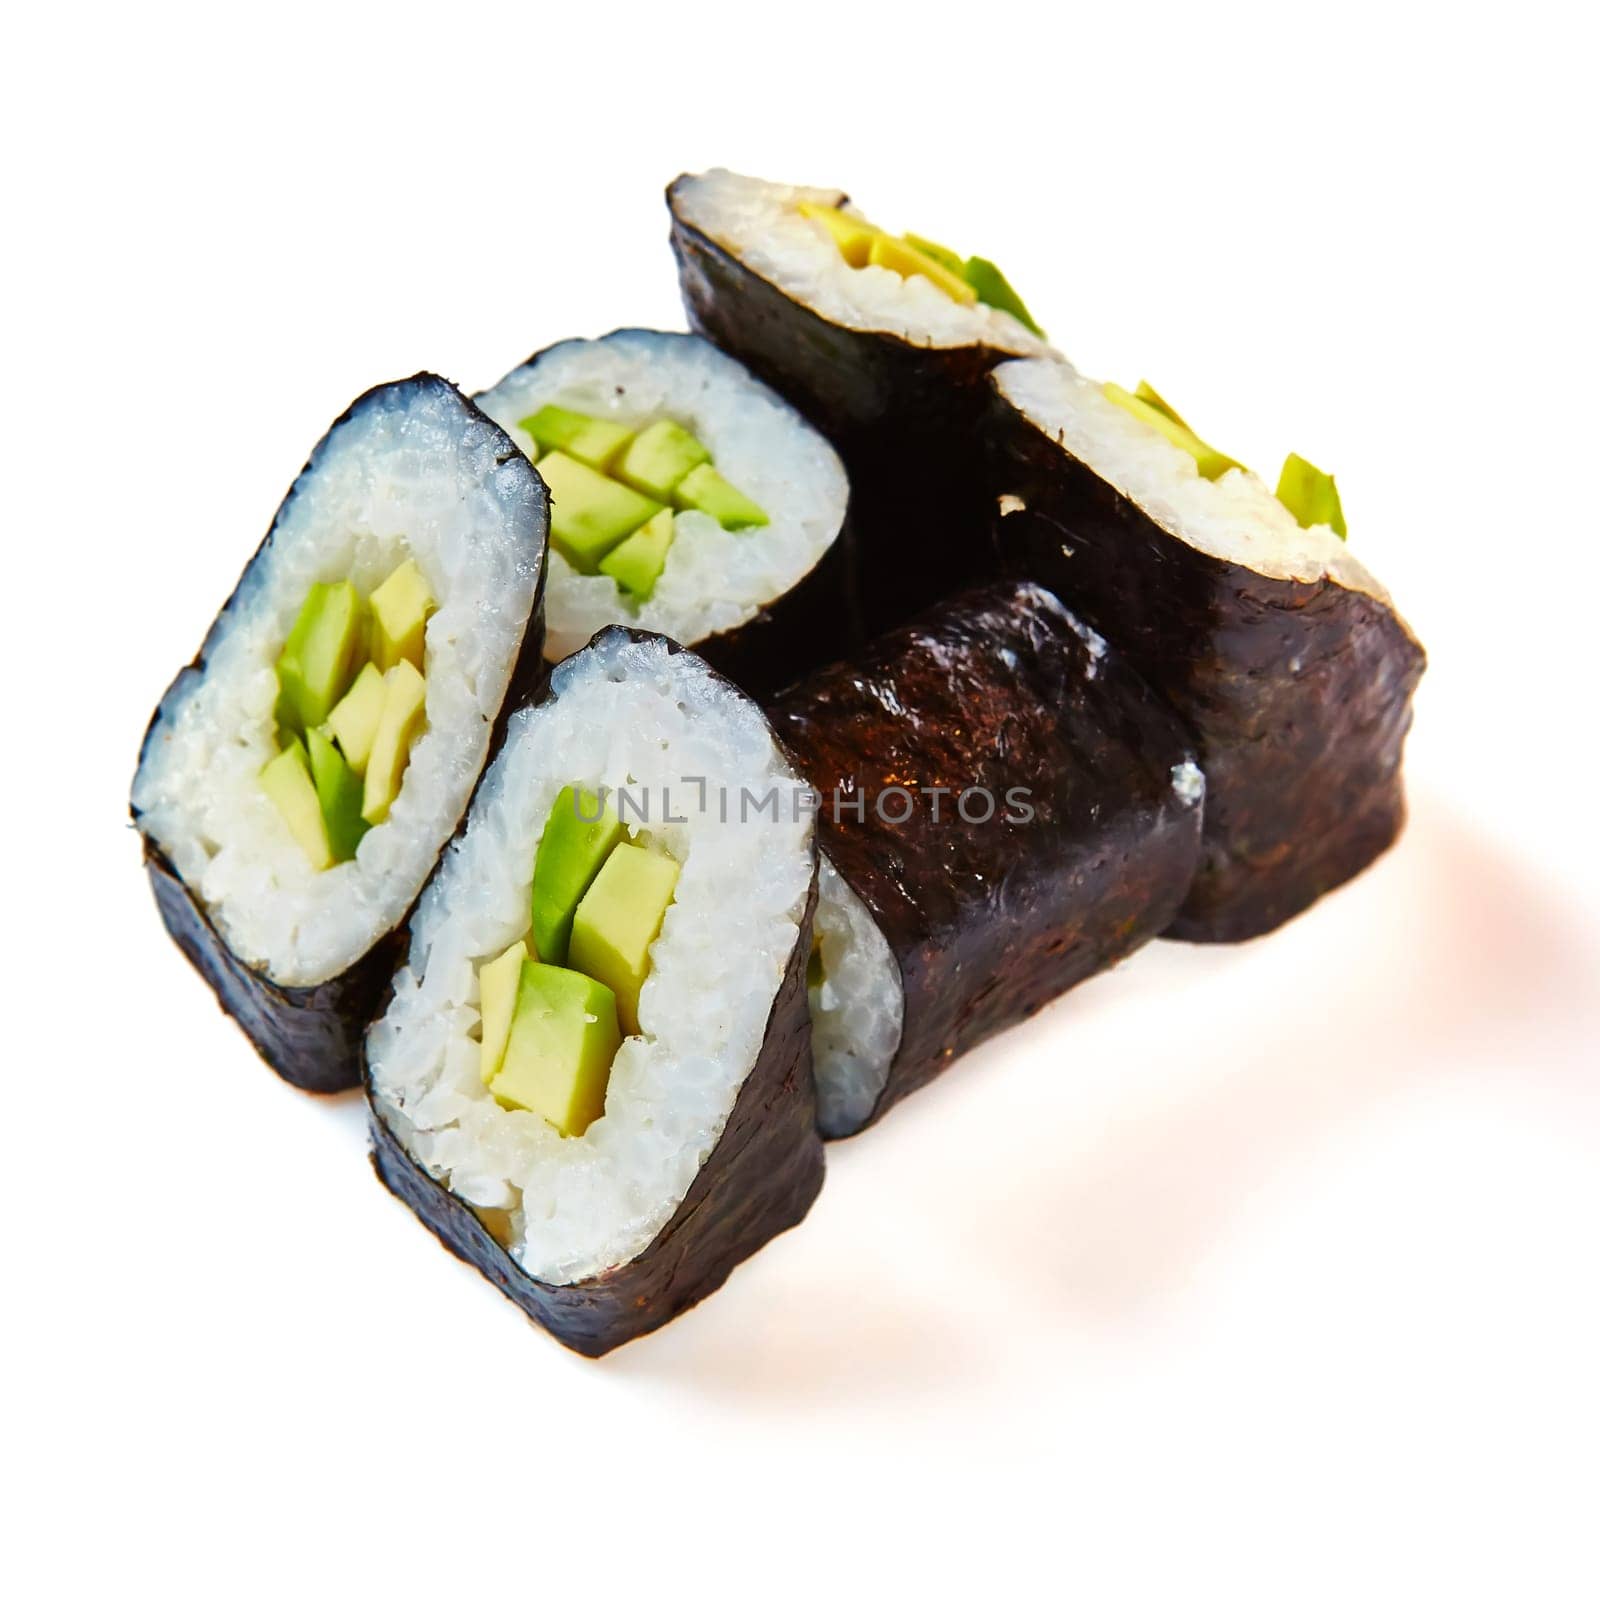 Japanese cuisine. Sushi roll with avocado on white background.